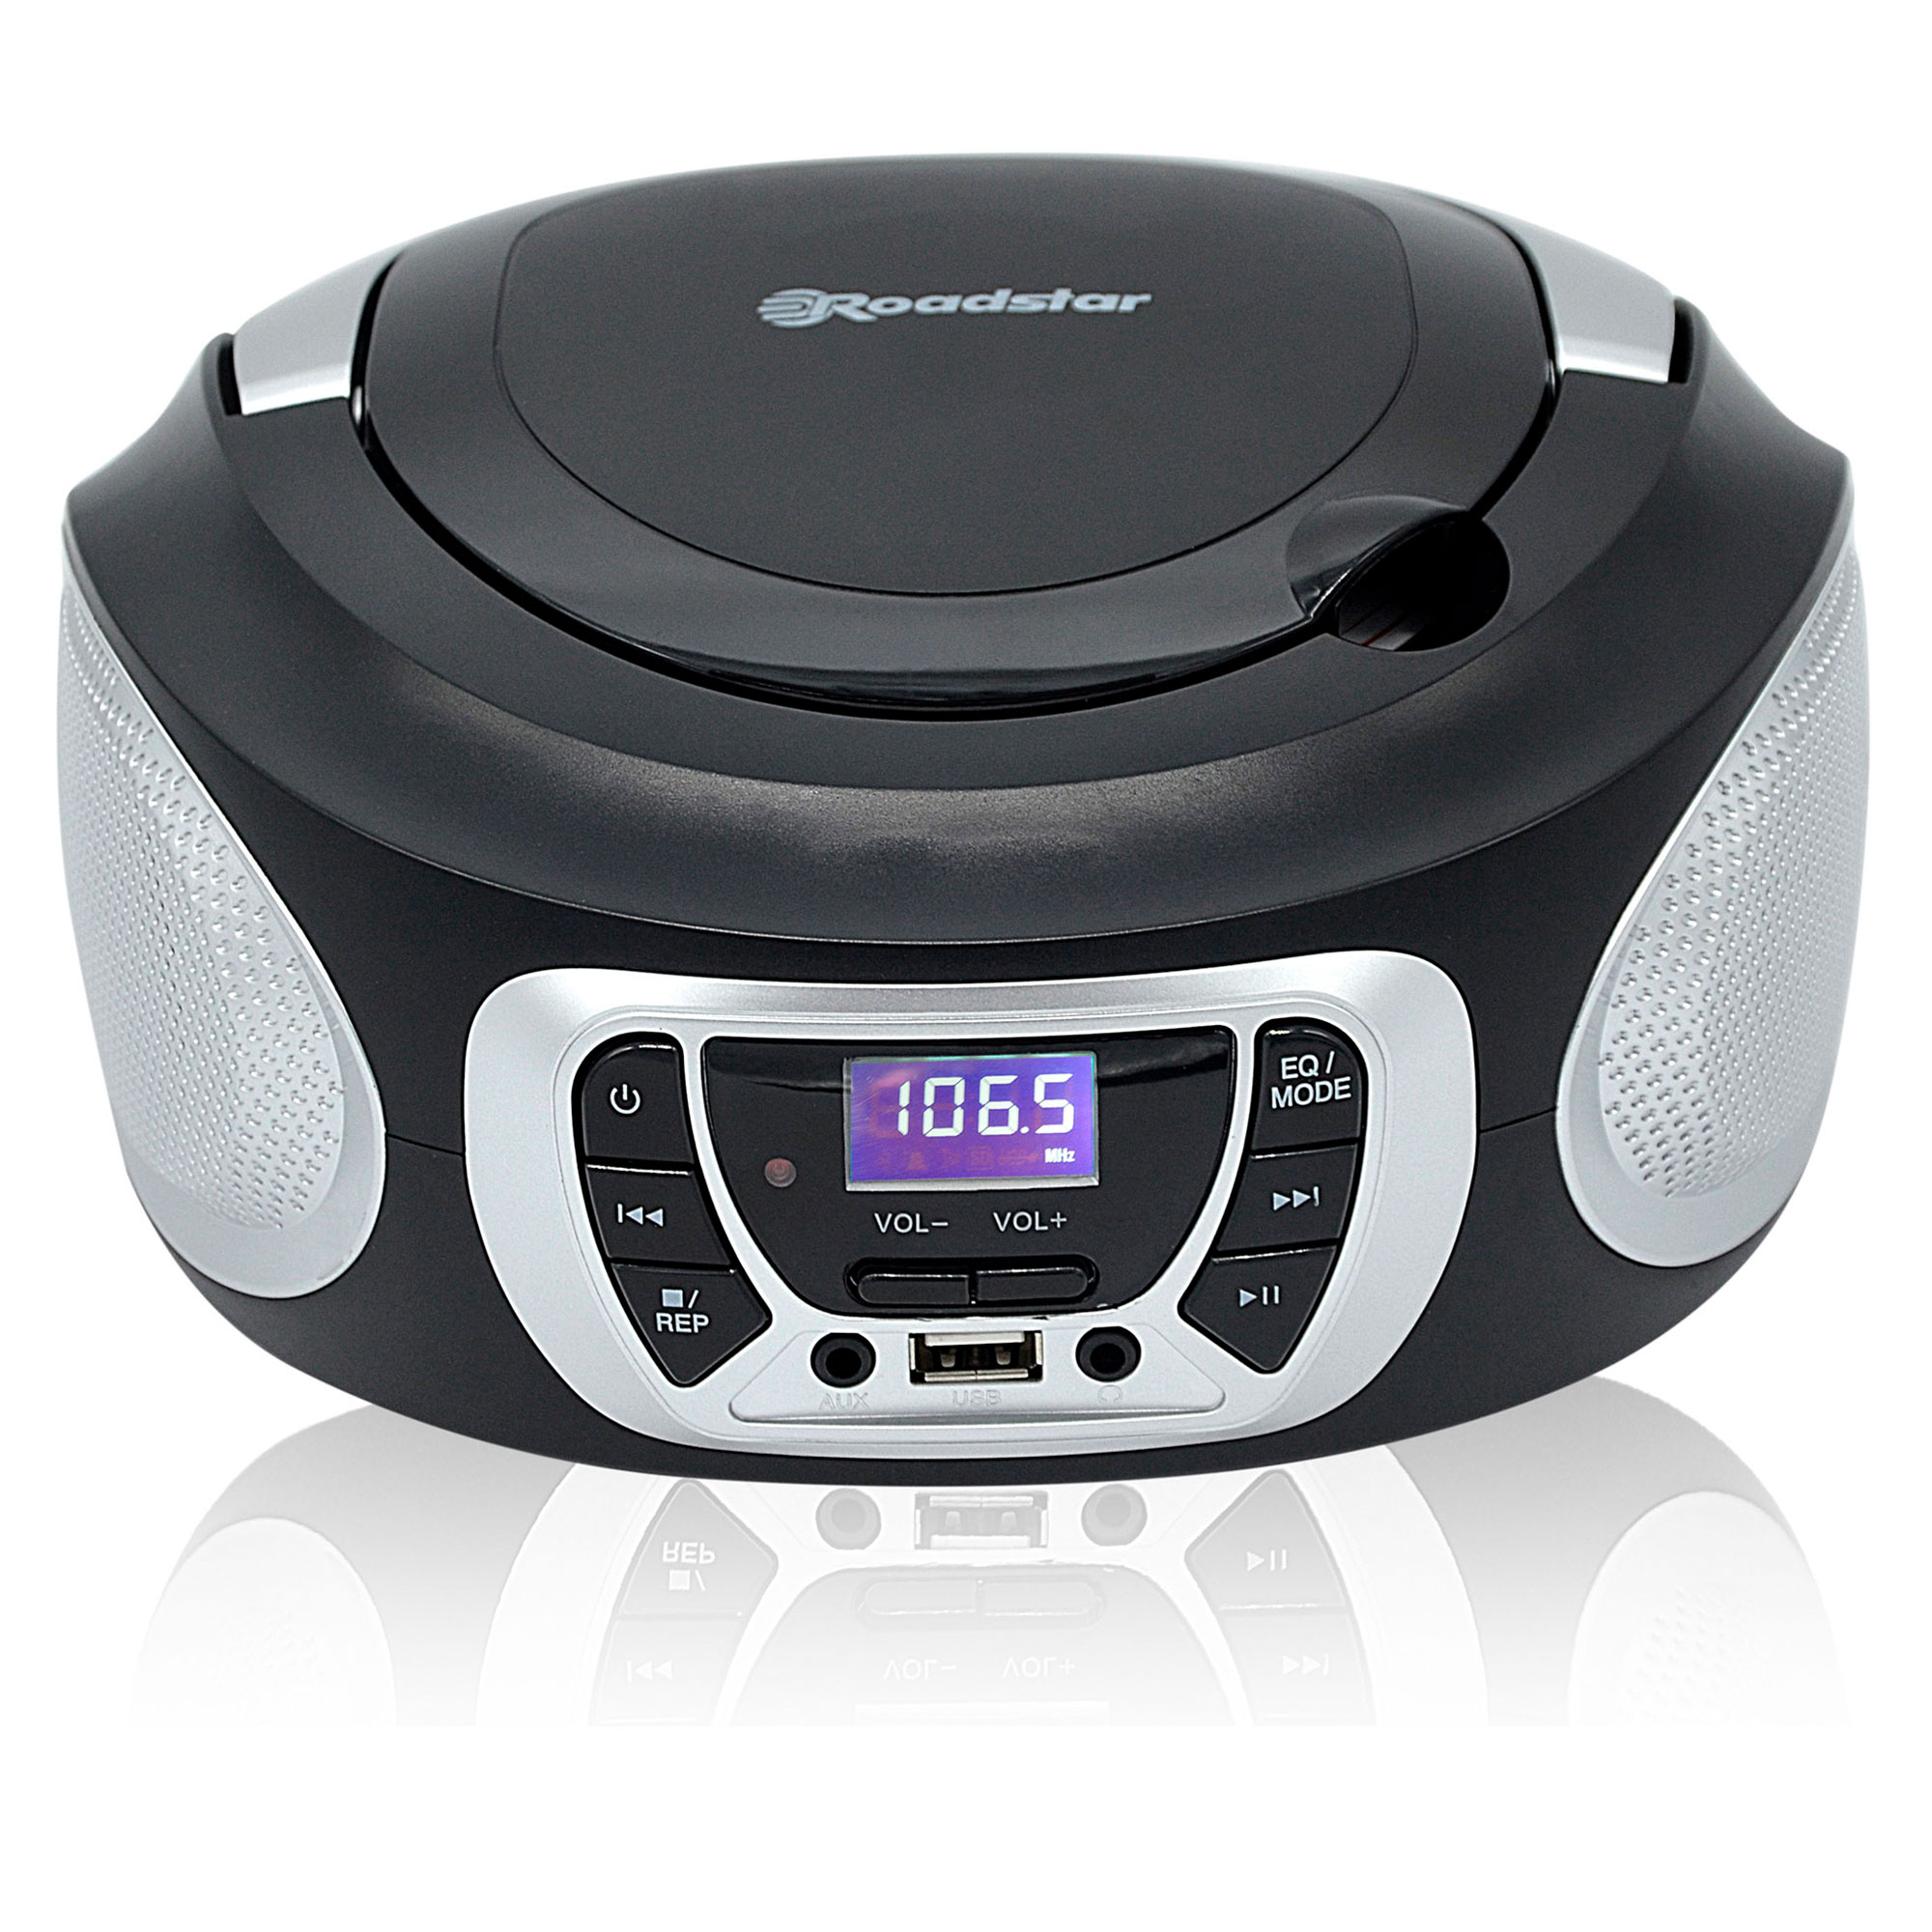 Roadstar CDR-365U/SL Radio CD Player Portátil Digital FM PLL, Boombox Reproductor CD, CD-R, CD-RW, CD-MP3, Puerto USB, Stereo, AUX-IN, Salida de Auriculares, Negro / Plata